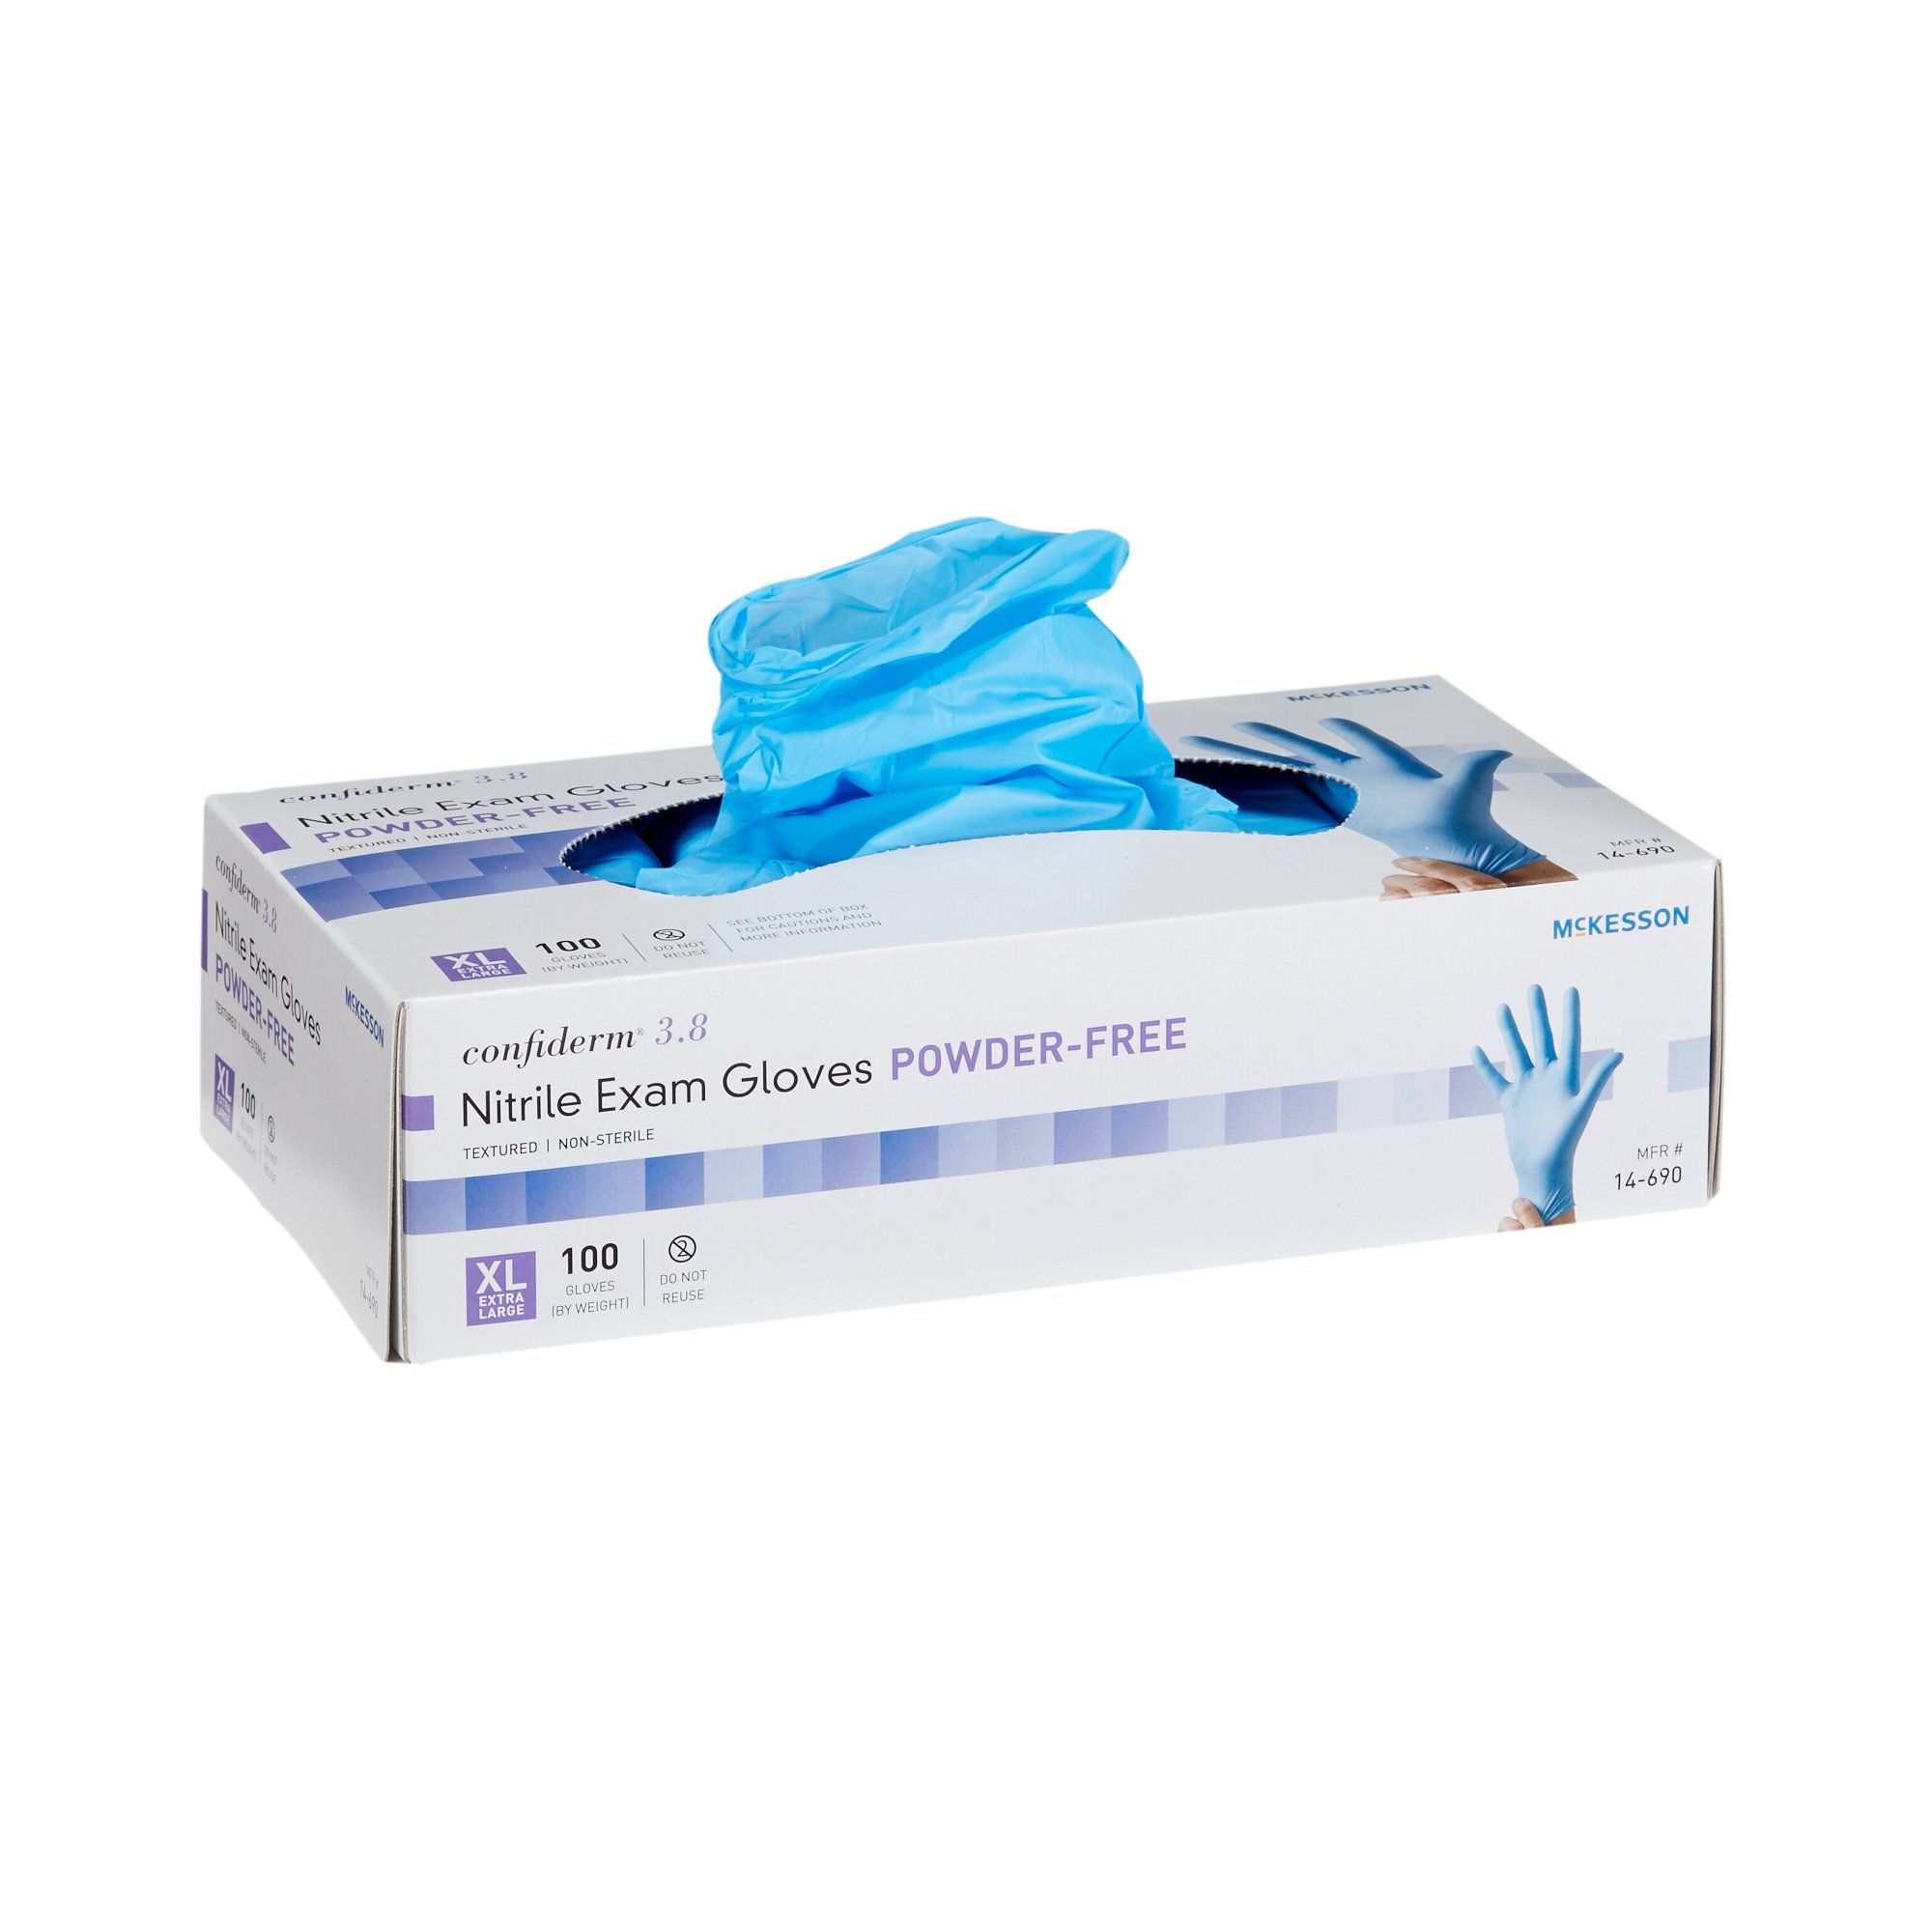 McKesson Confiderm® 3.8 Nitrile Exam Gloves, X-Large - 100 ct